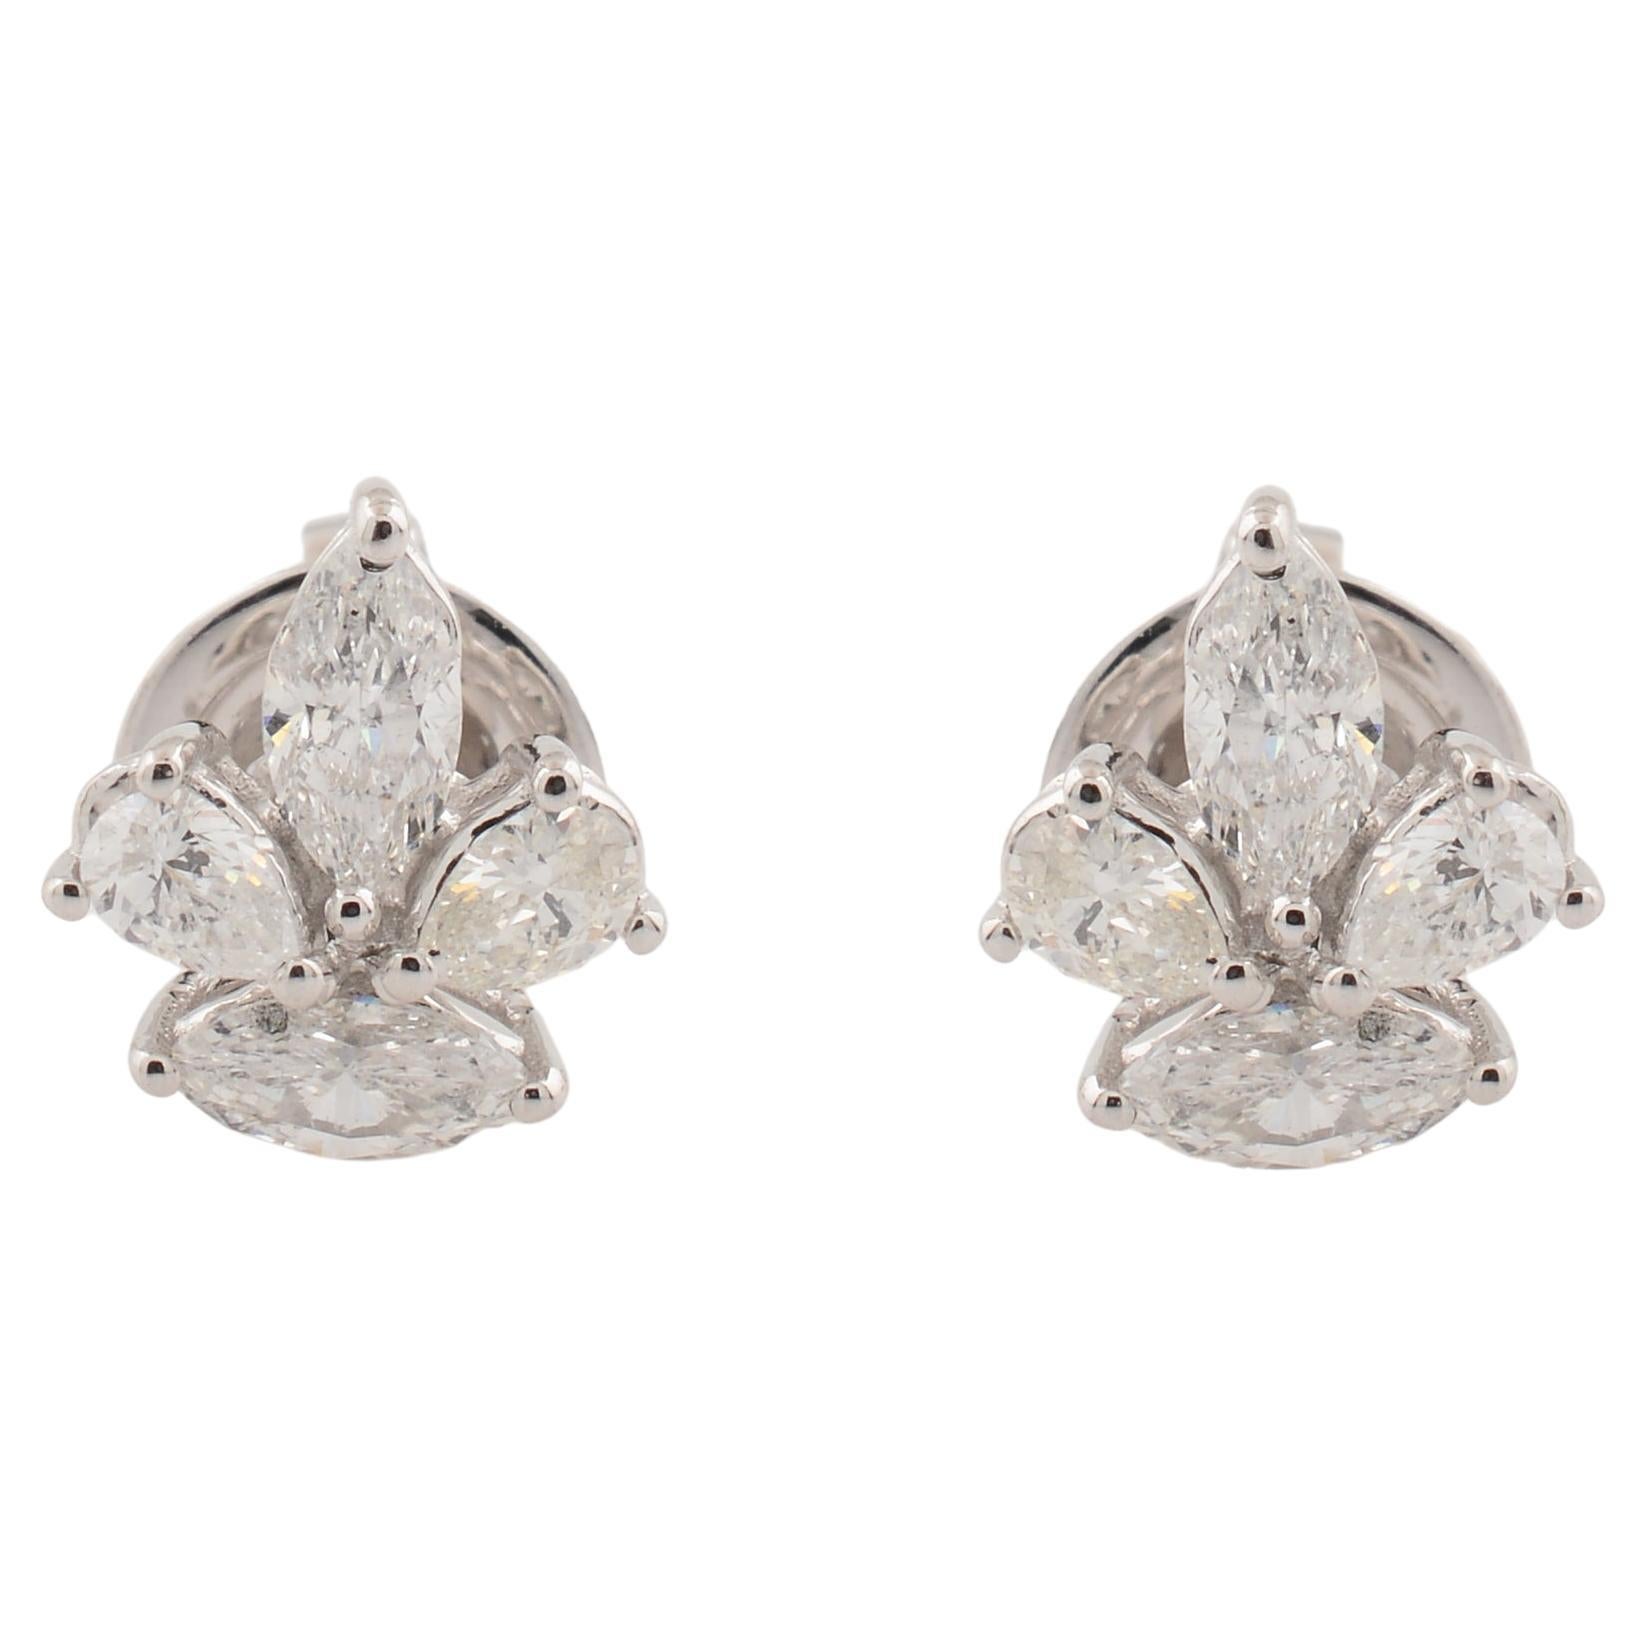 1.05 Carat SI/HI Marquise Pear Diamond Stud Earrings 18 Karat White Gold Jewelry